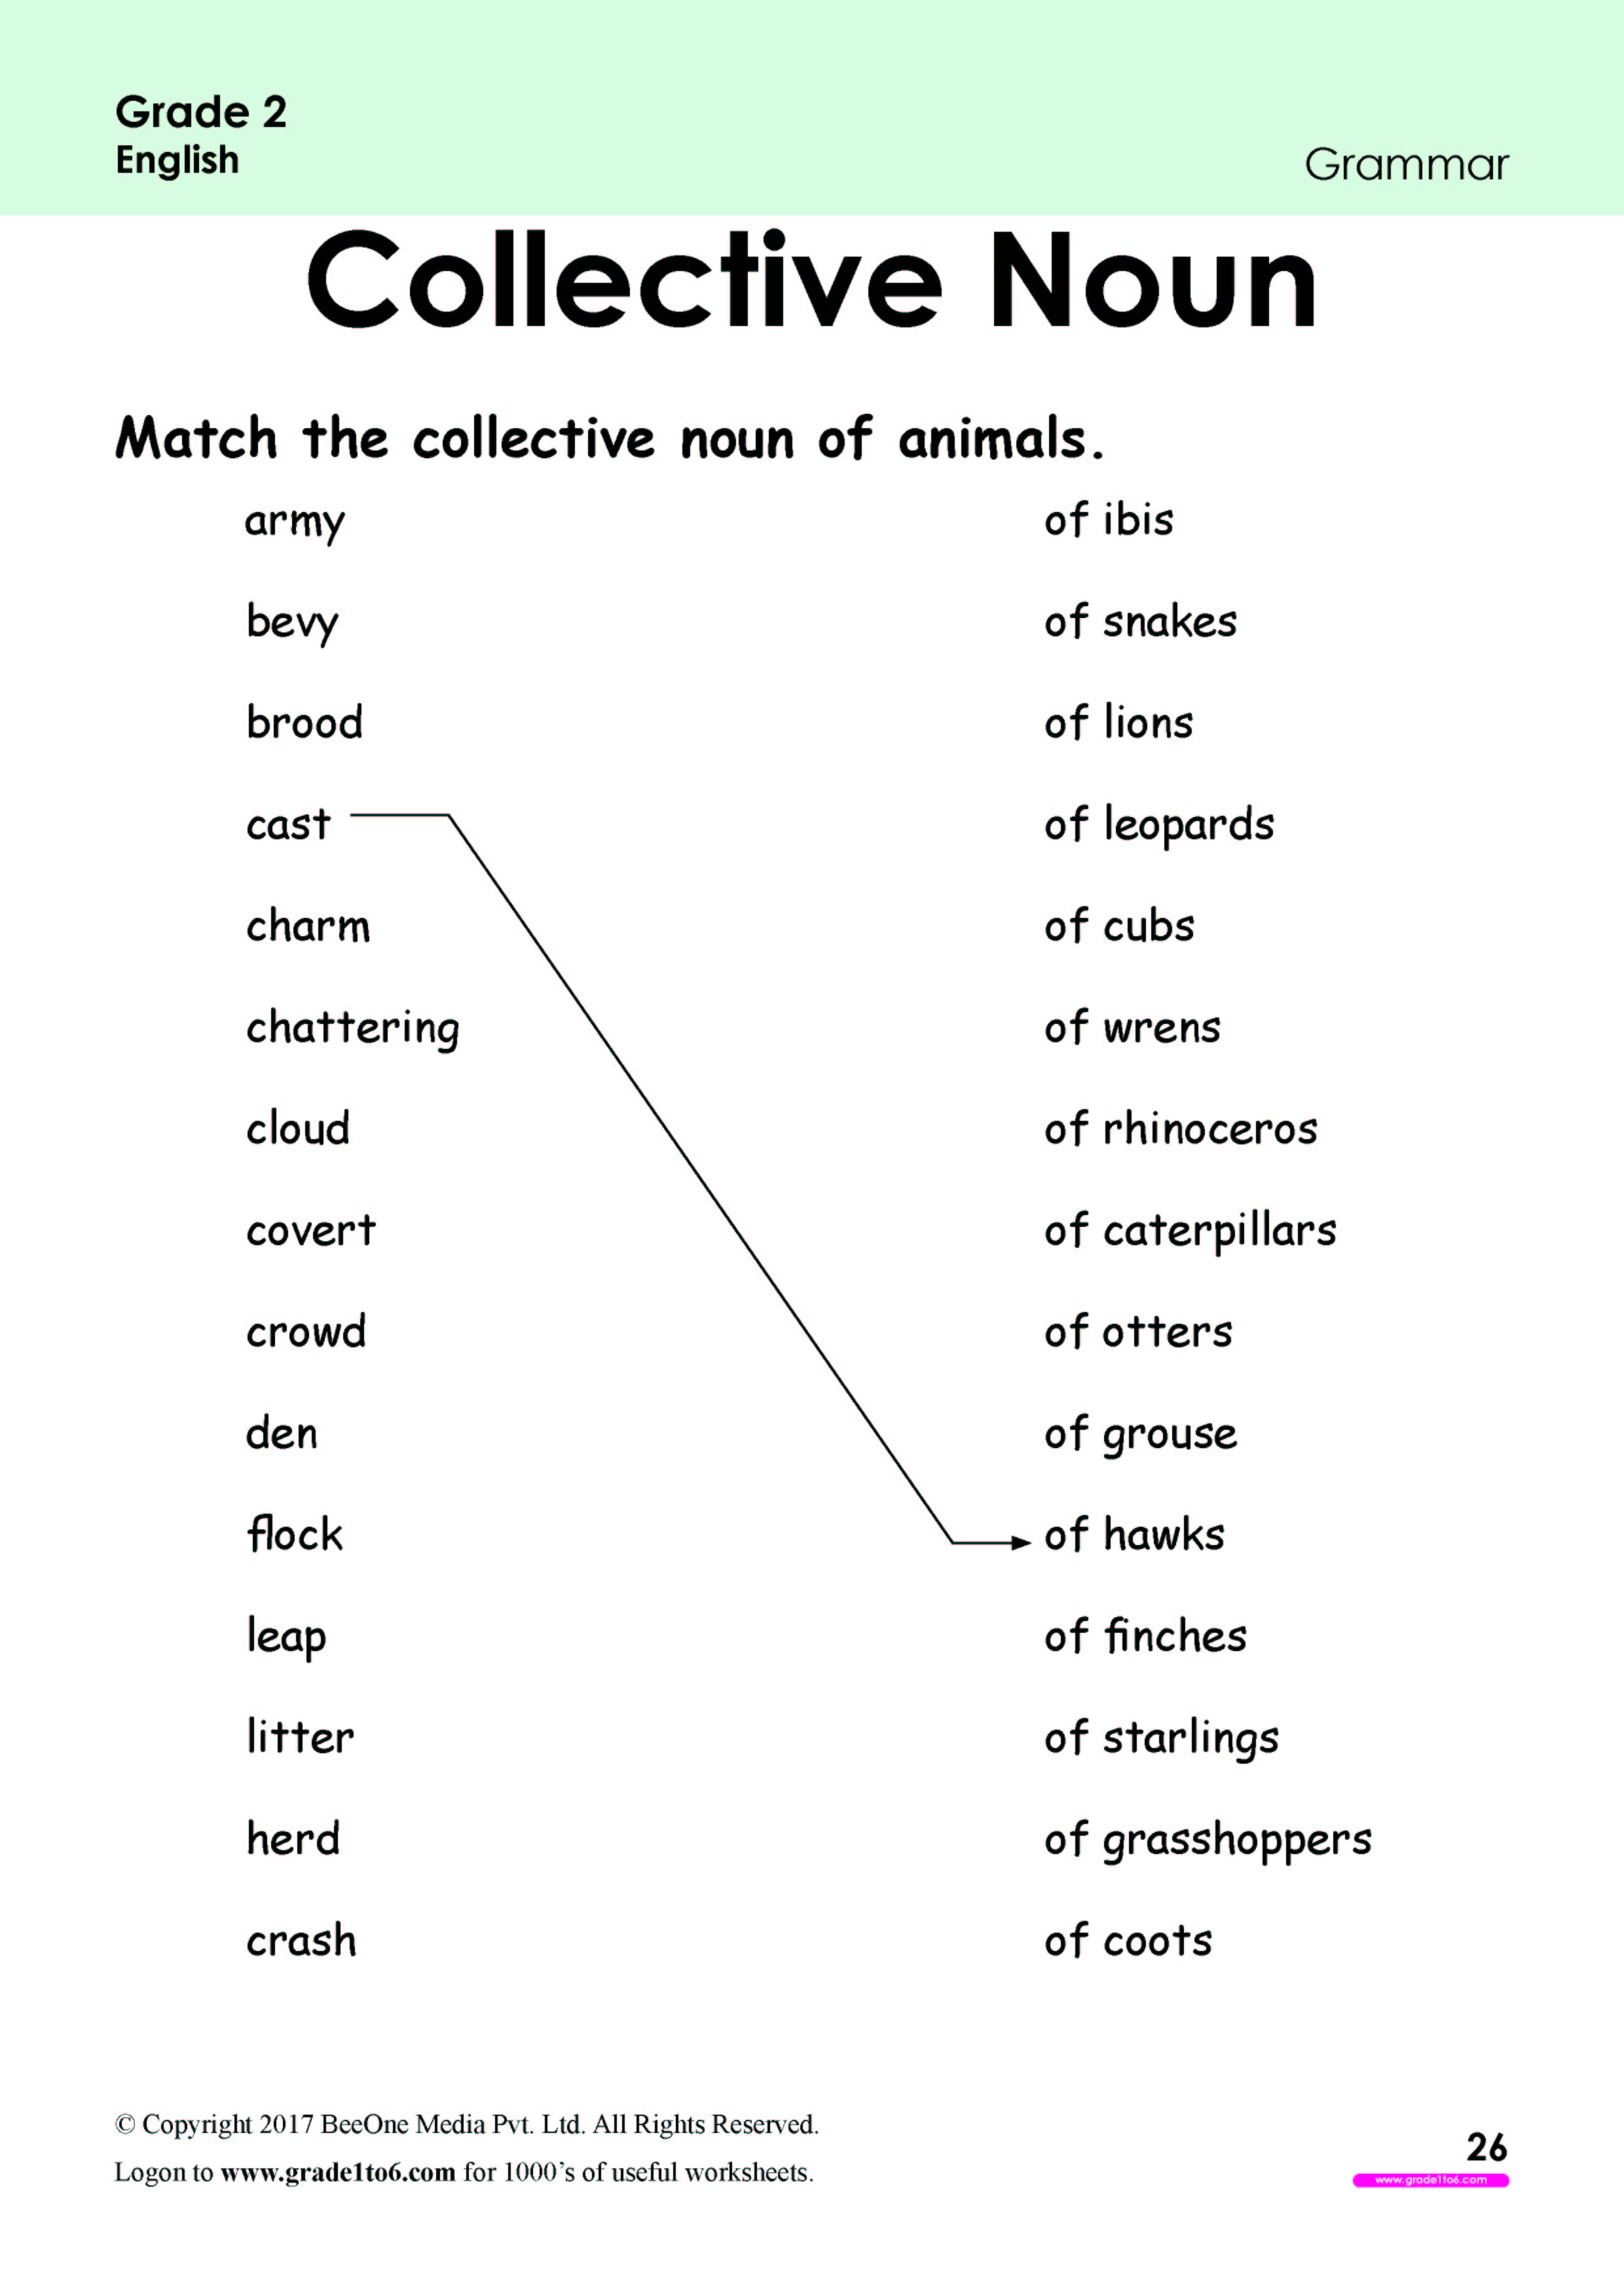 collective noun for animals squad